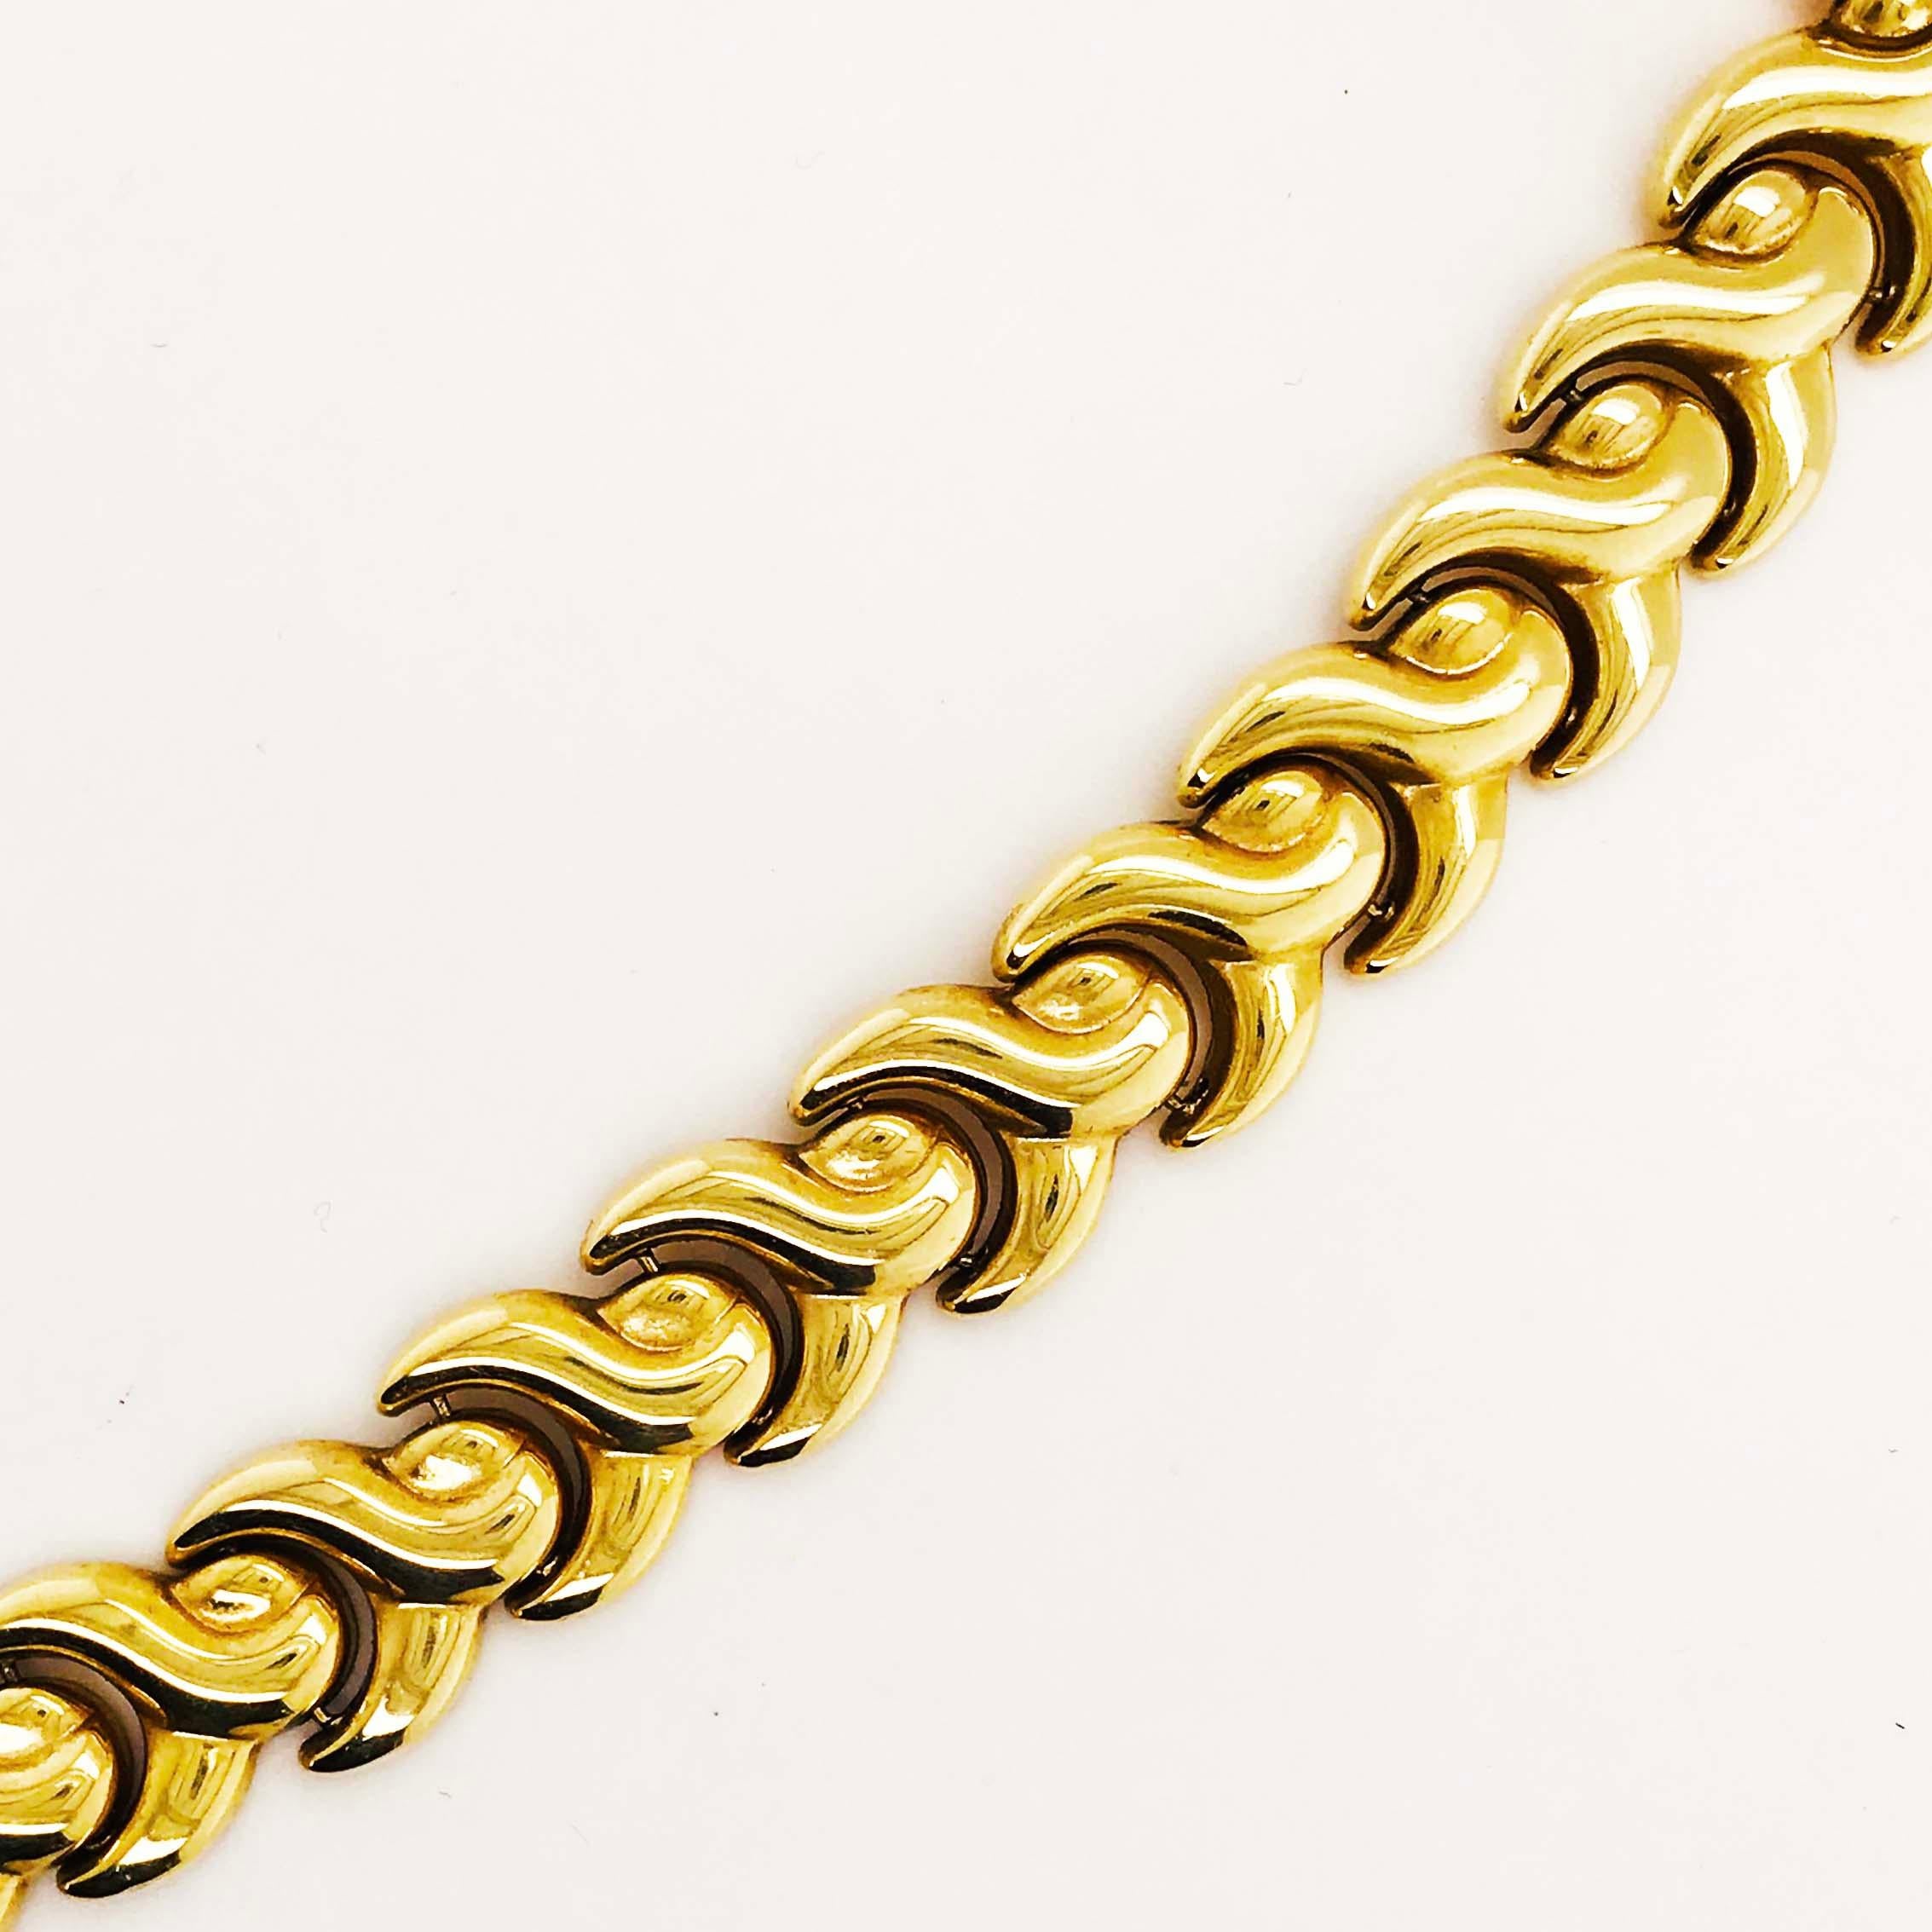 Women's Custom Link Choker Necklace in 14 Karat Yellow Gold, Italian Made Chain Necklace